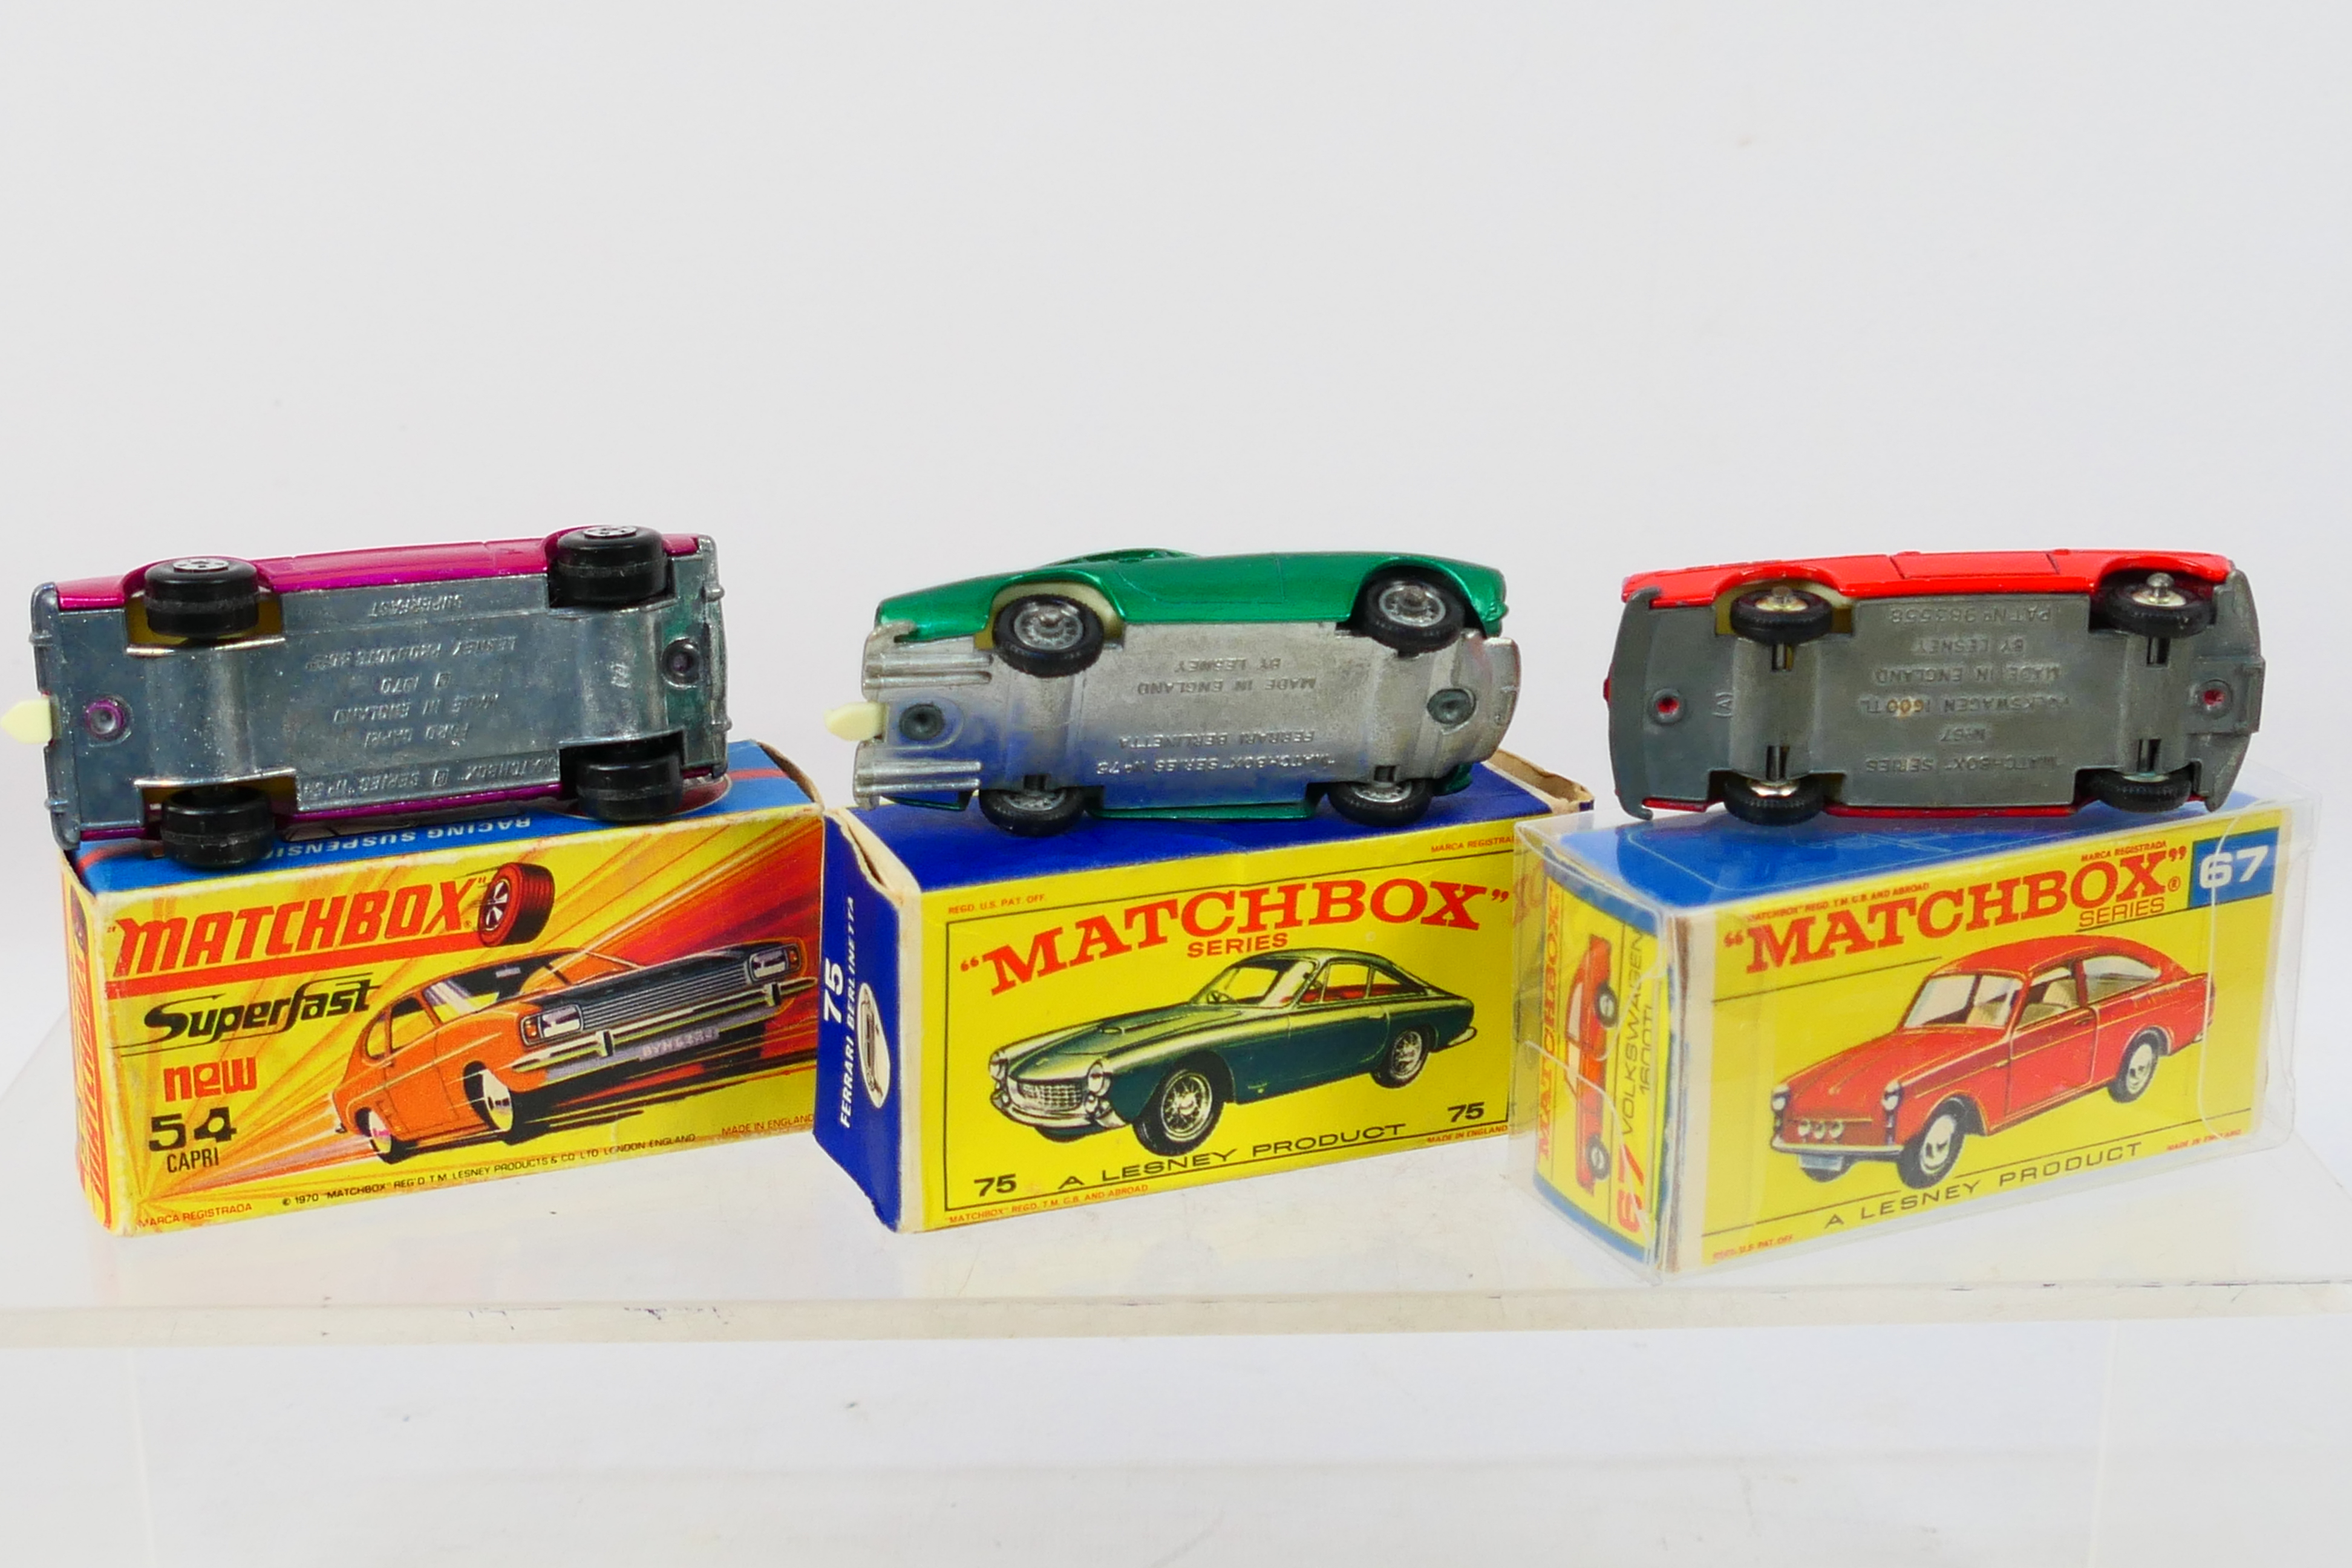 Matchbox - 3 x boxed models, Ford Capri # 54, Volkswagen 1600TL # 67 and Ferrari Berlinetta # 75. - Image 6 of 6